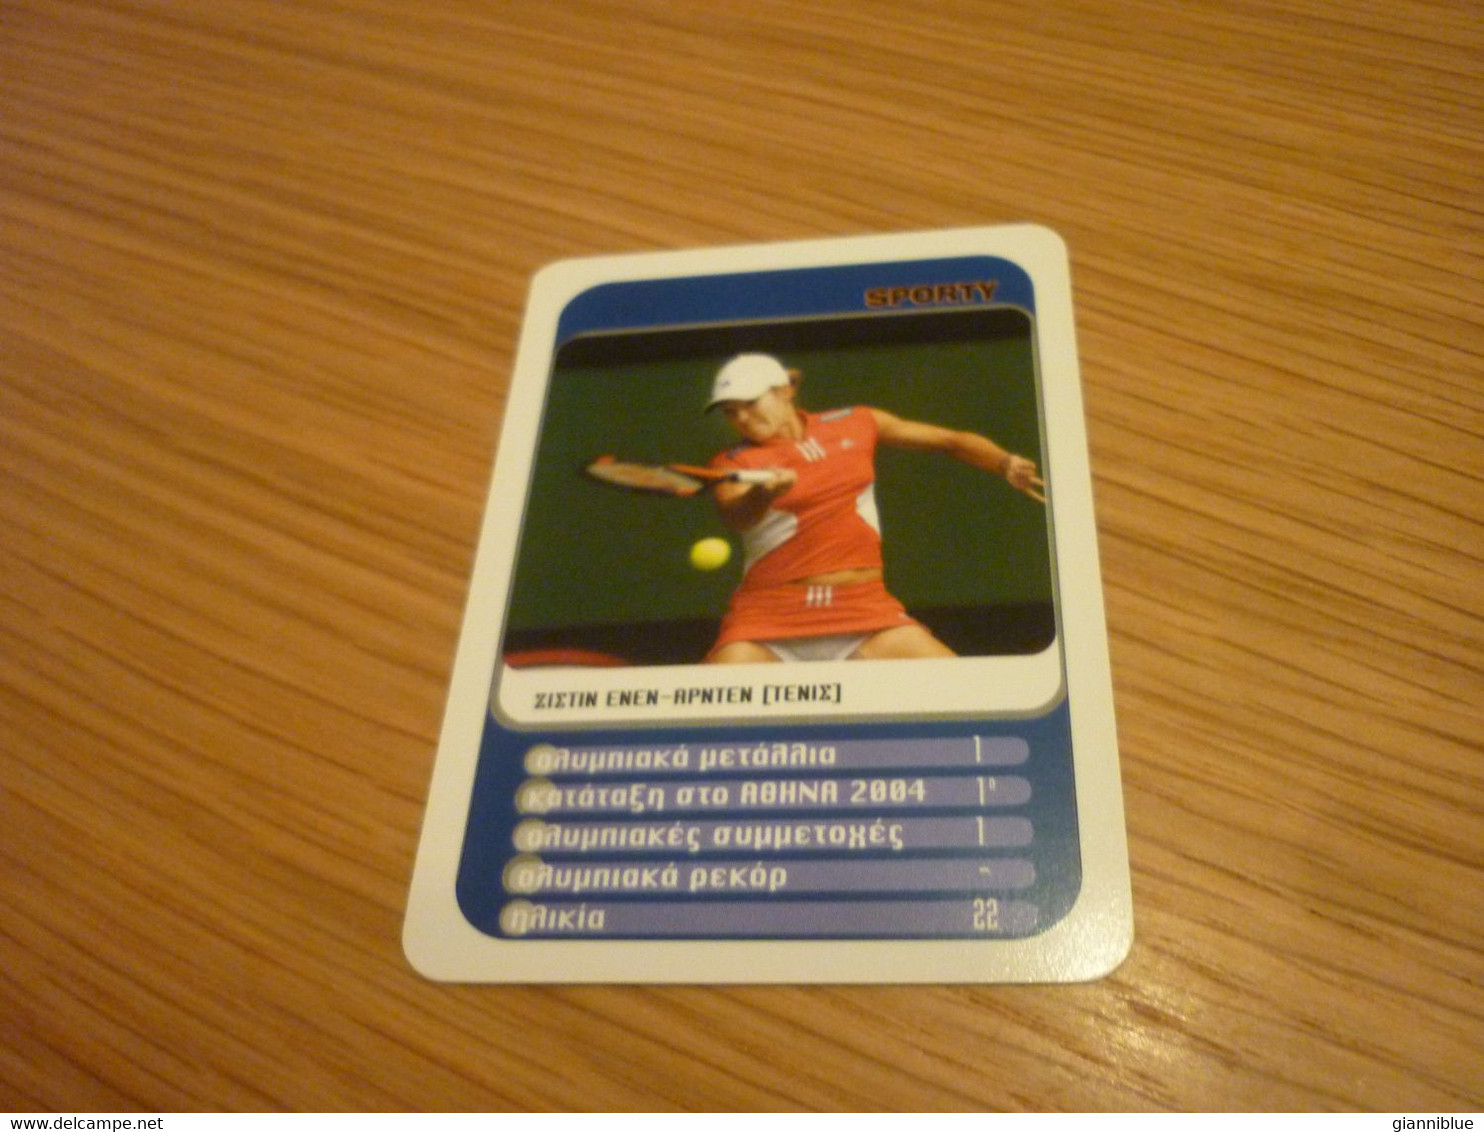 Justine Henin-Hardenne Rookie Belgian Tennis Player Athens 2004 Olympic Games Medalist Greece Greek Trading Card - Trading-Karten